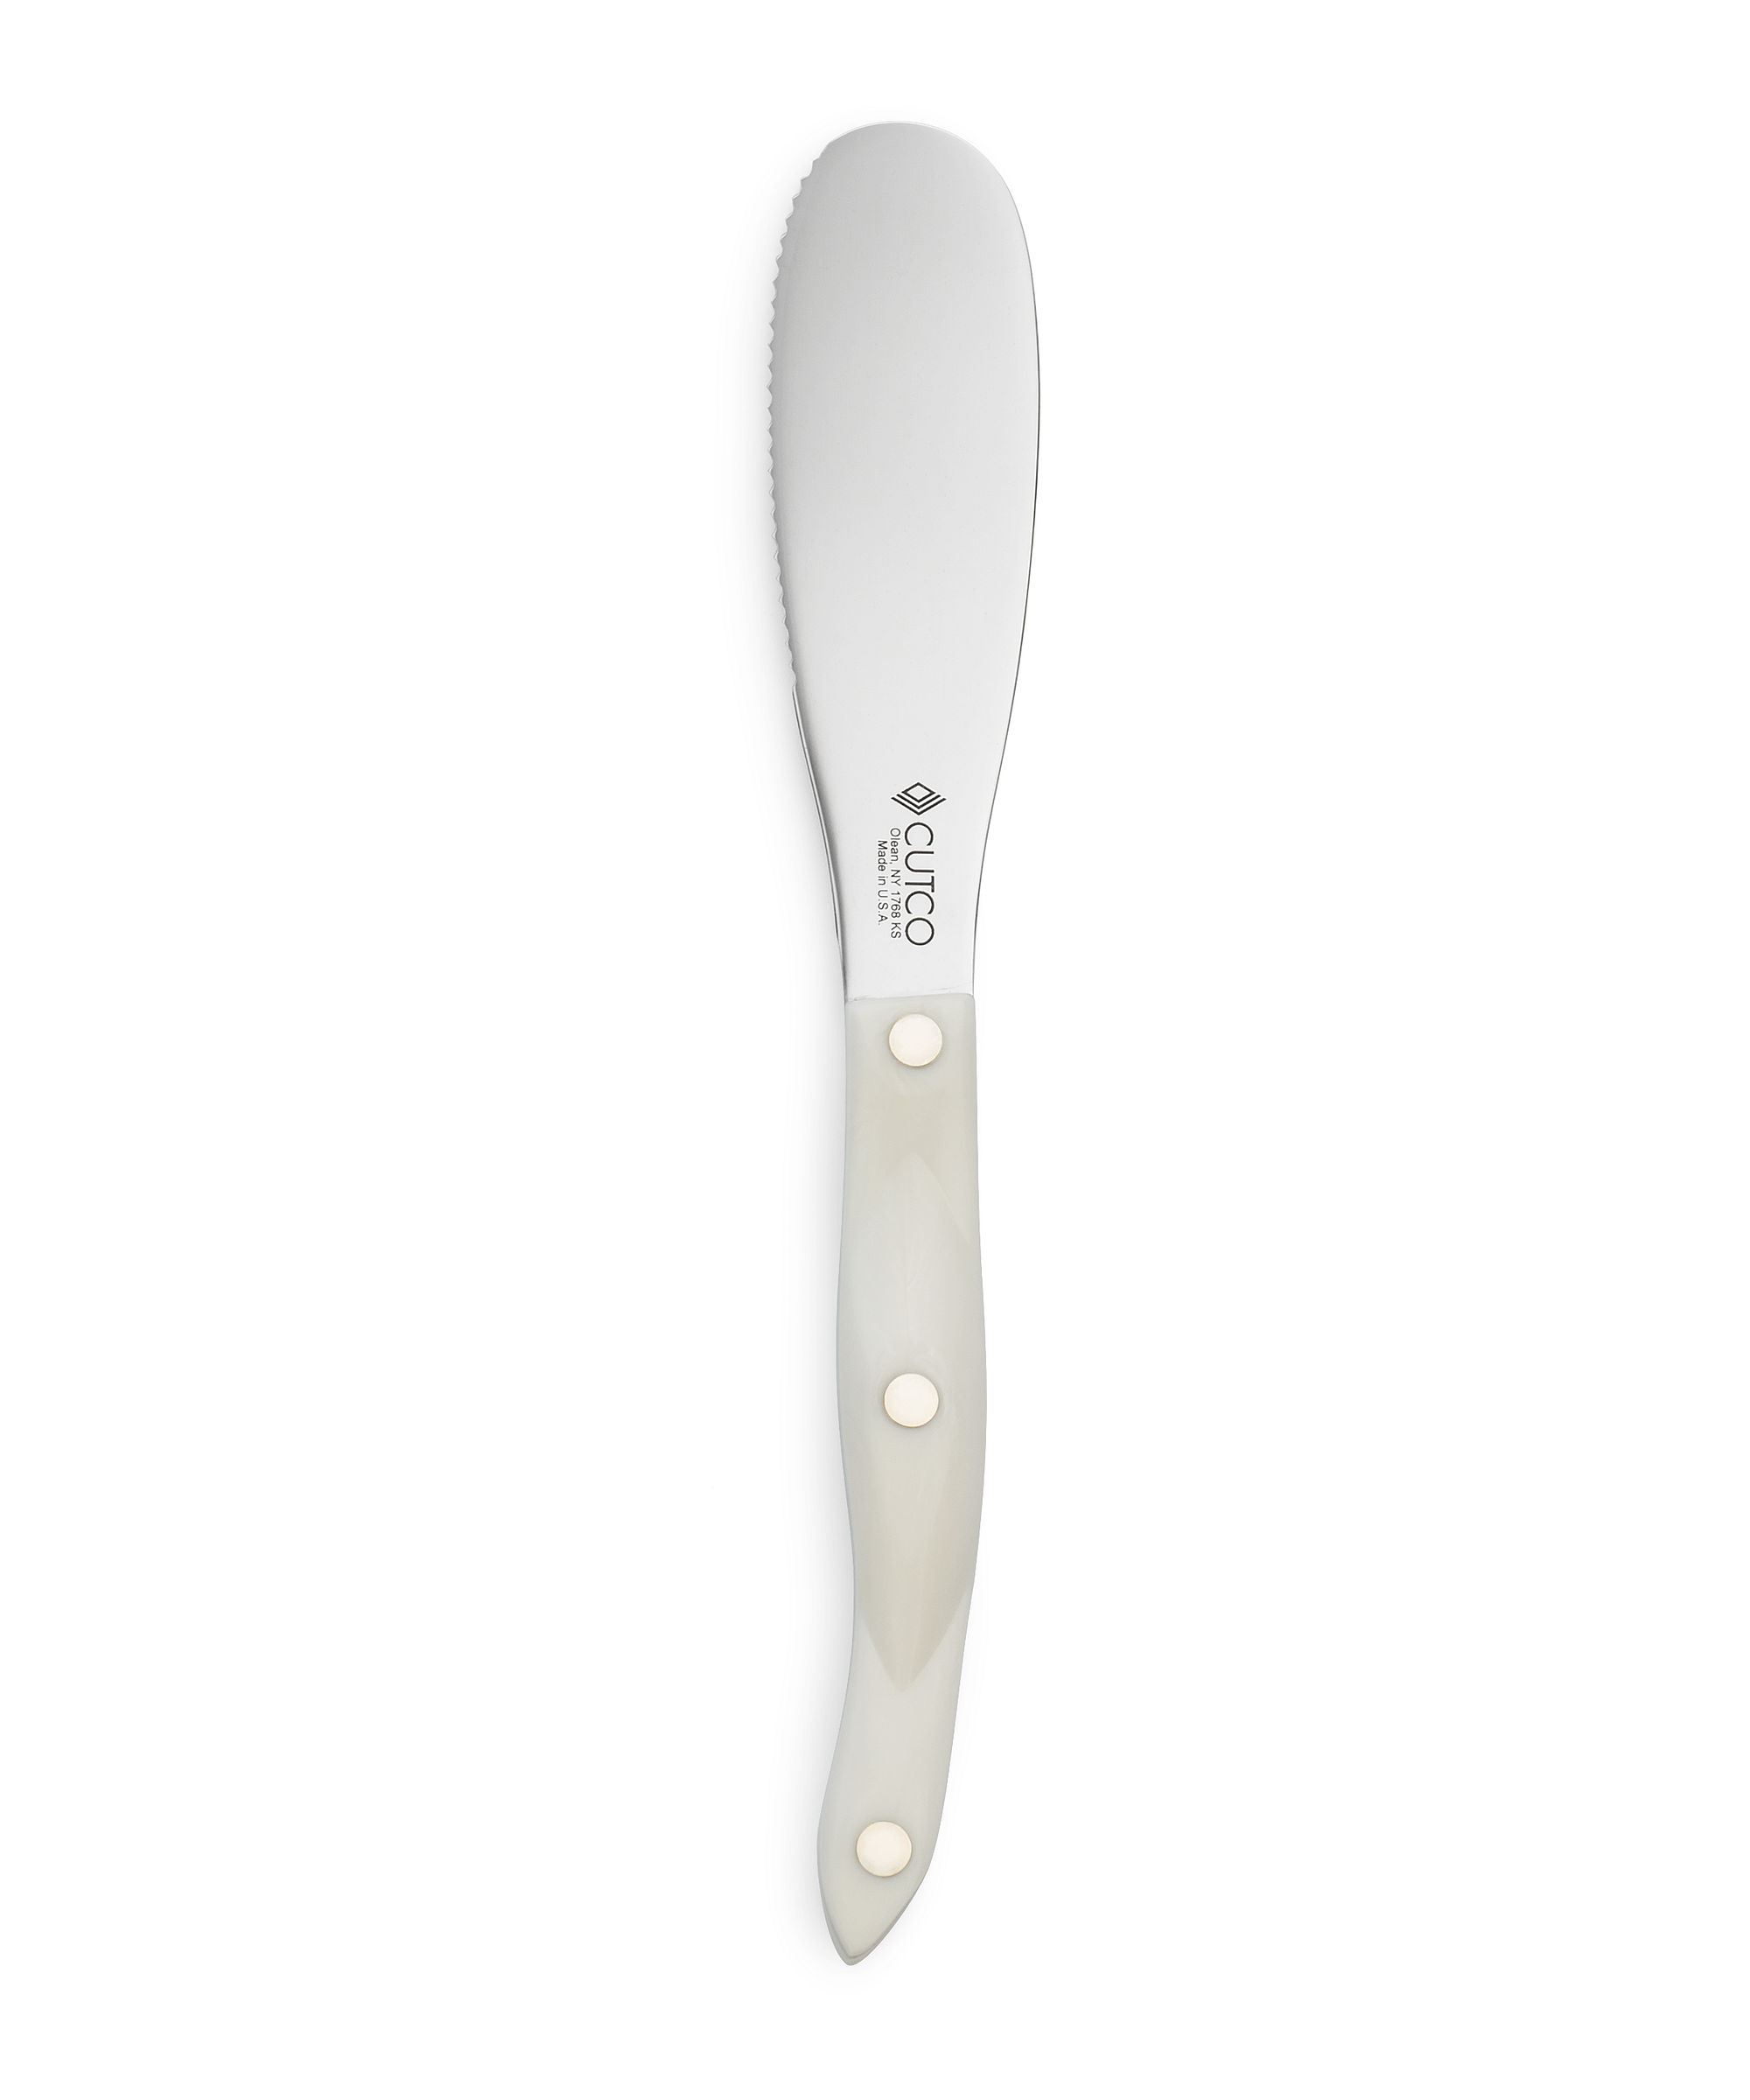 Cutco Cutlery 1768 KK Serrated Spatula Spreader Knife Classic Dark